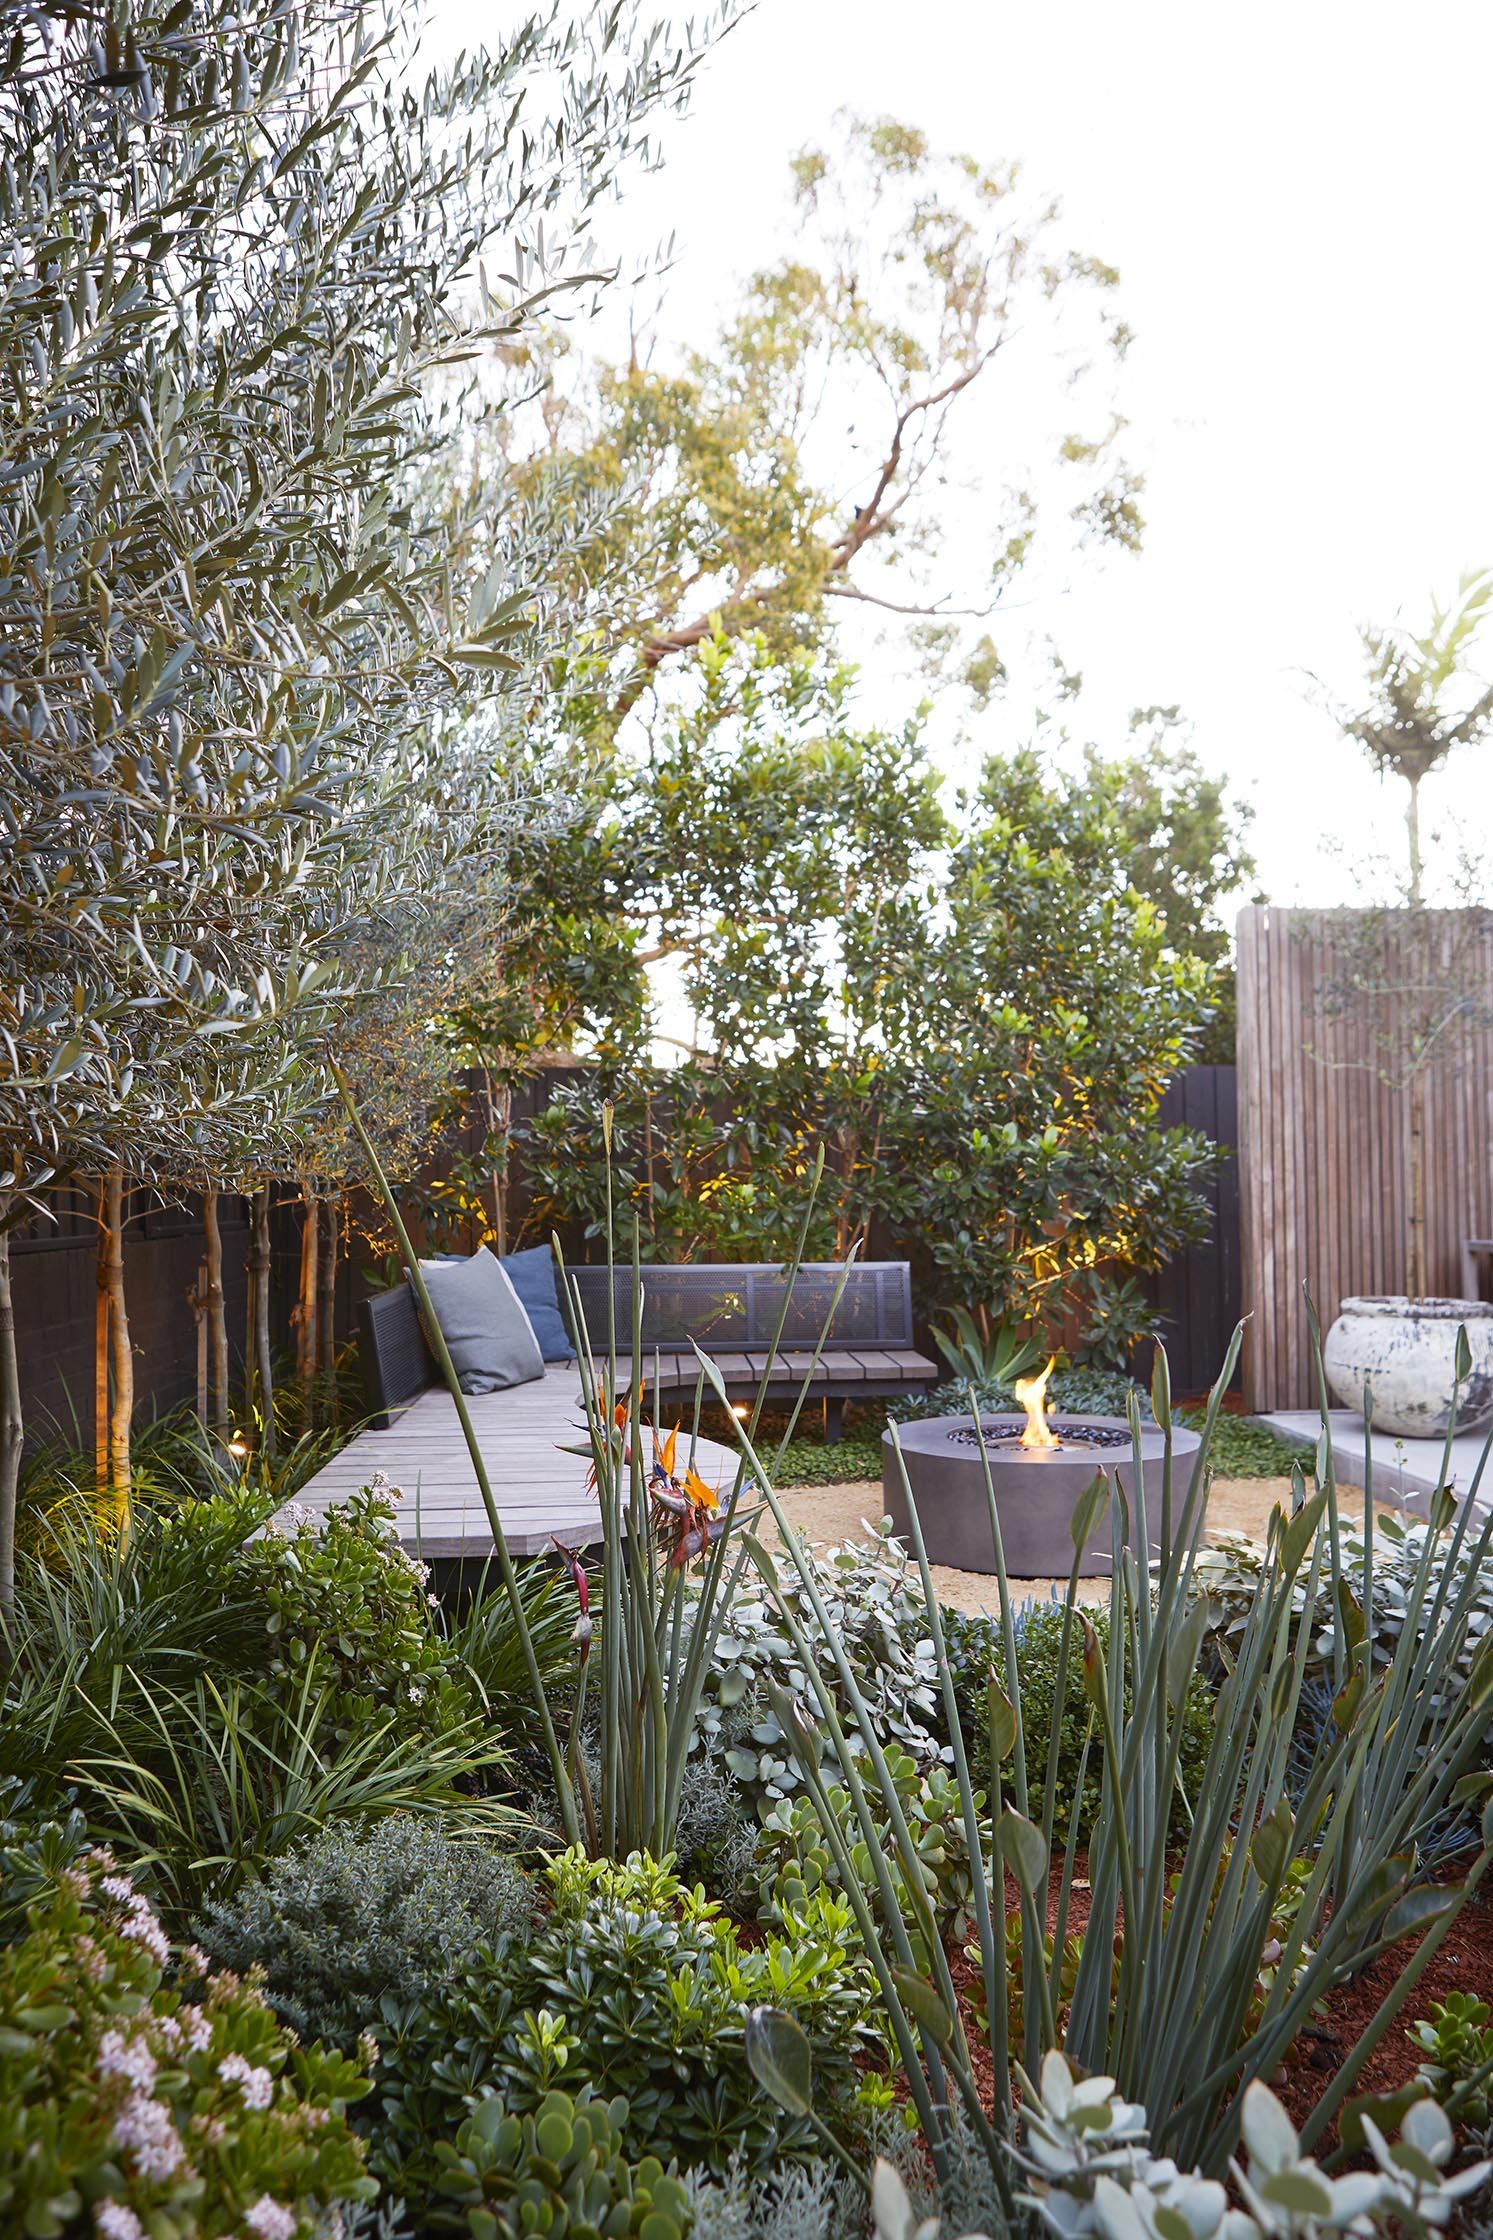 Garden Design Tips for Creating a Beautiful Outdoor Space